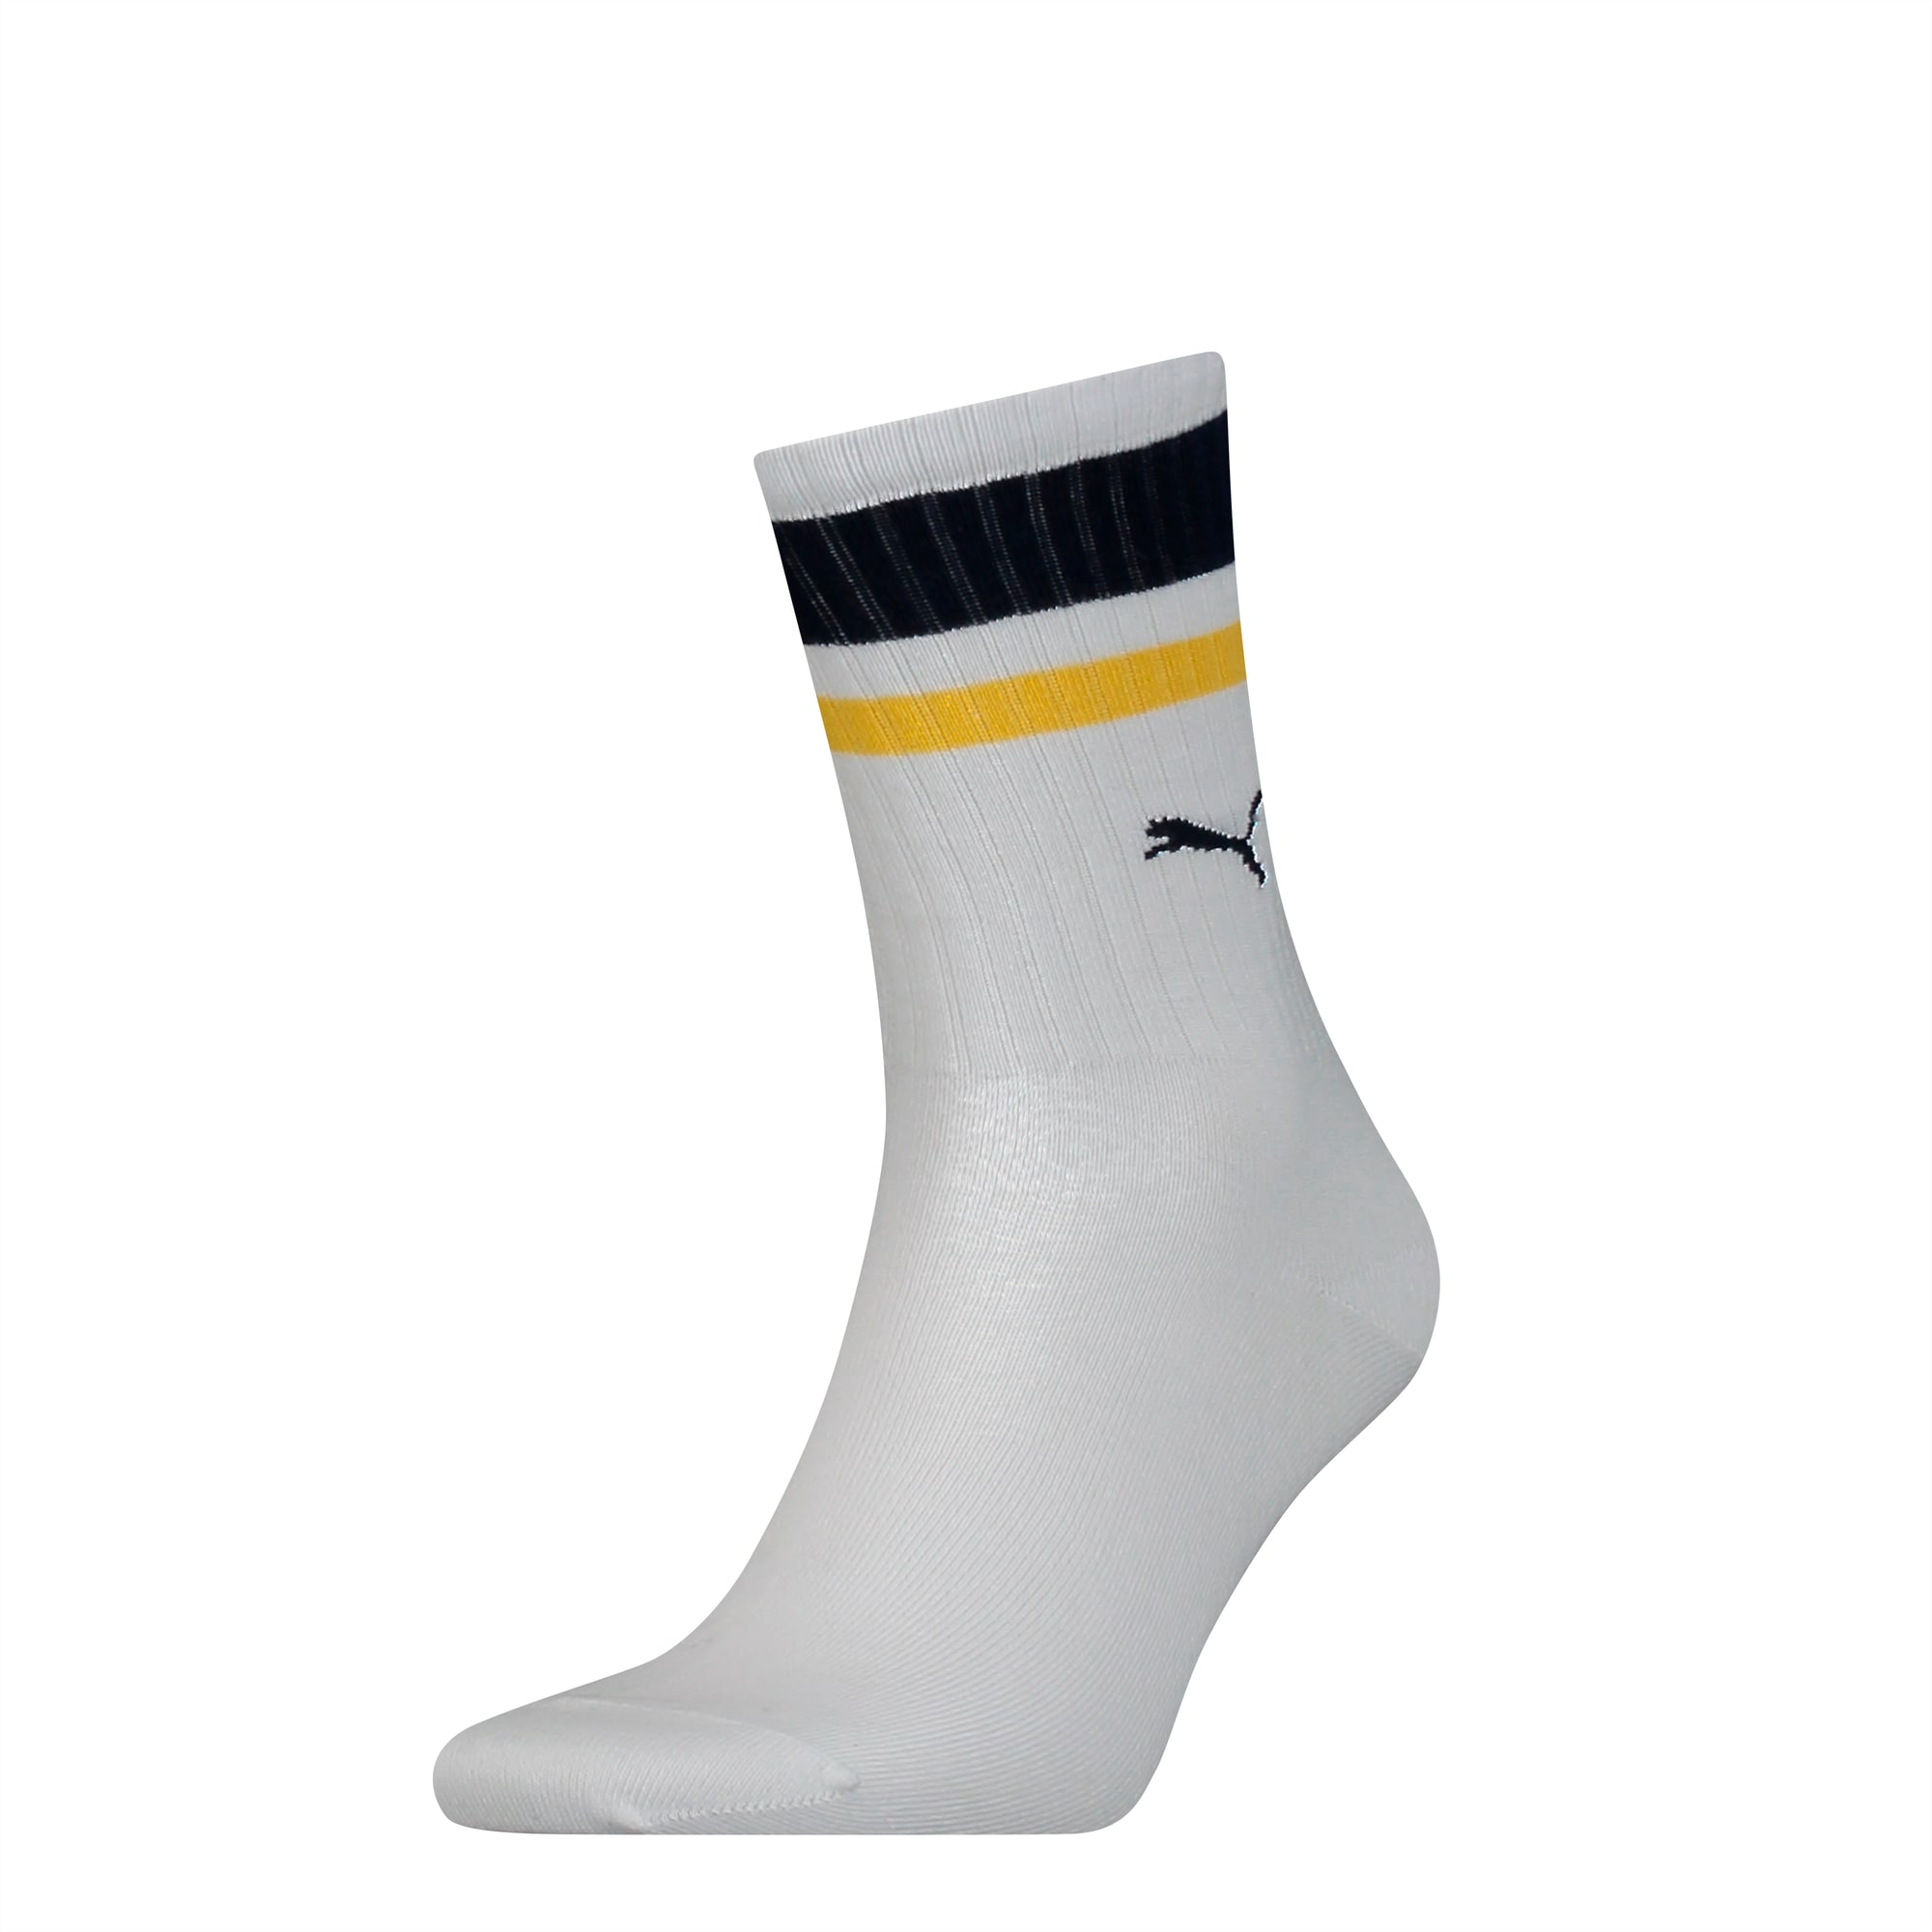 Basic Trainers Socks 1 Pack, blue/yellow, large-SEA